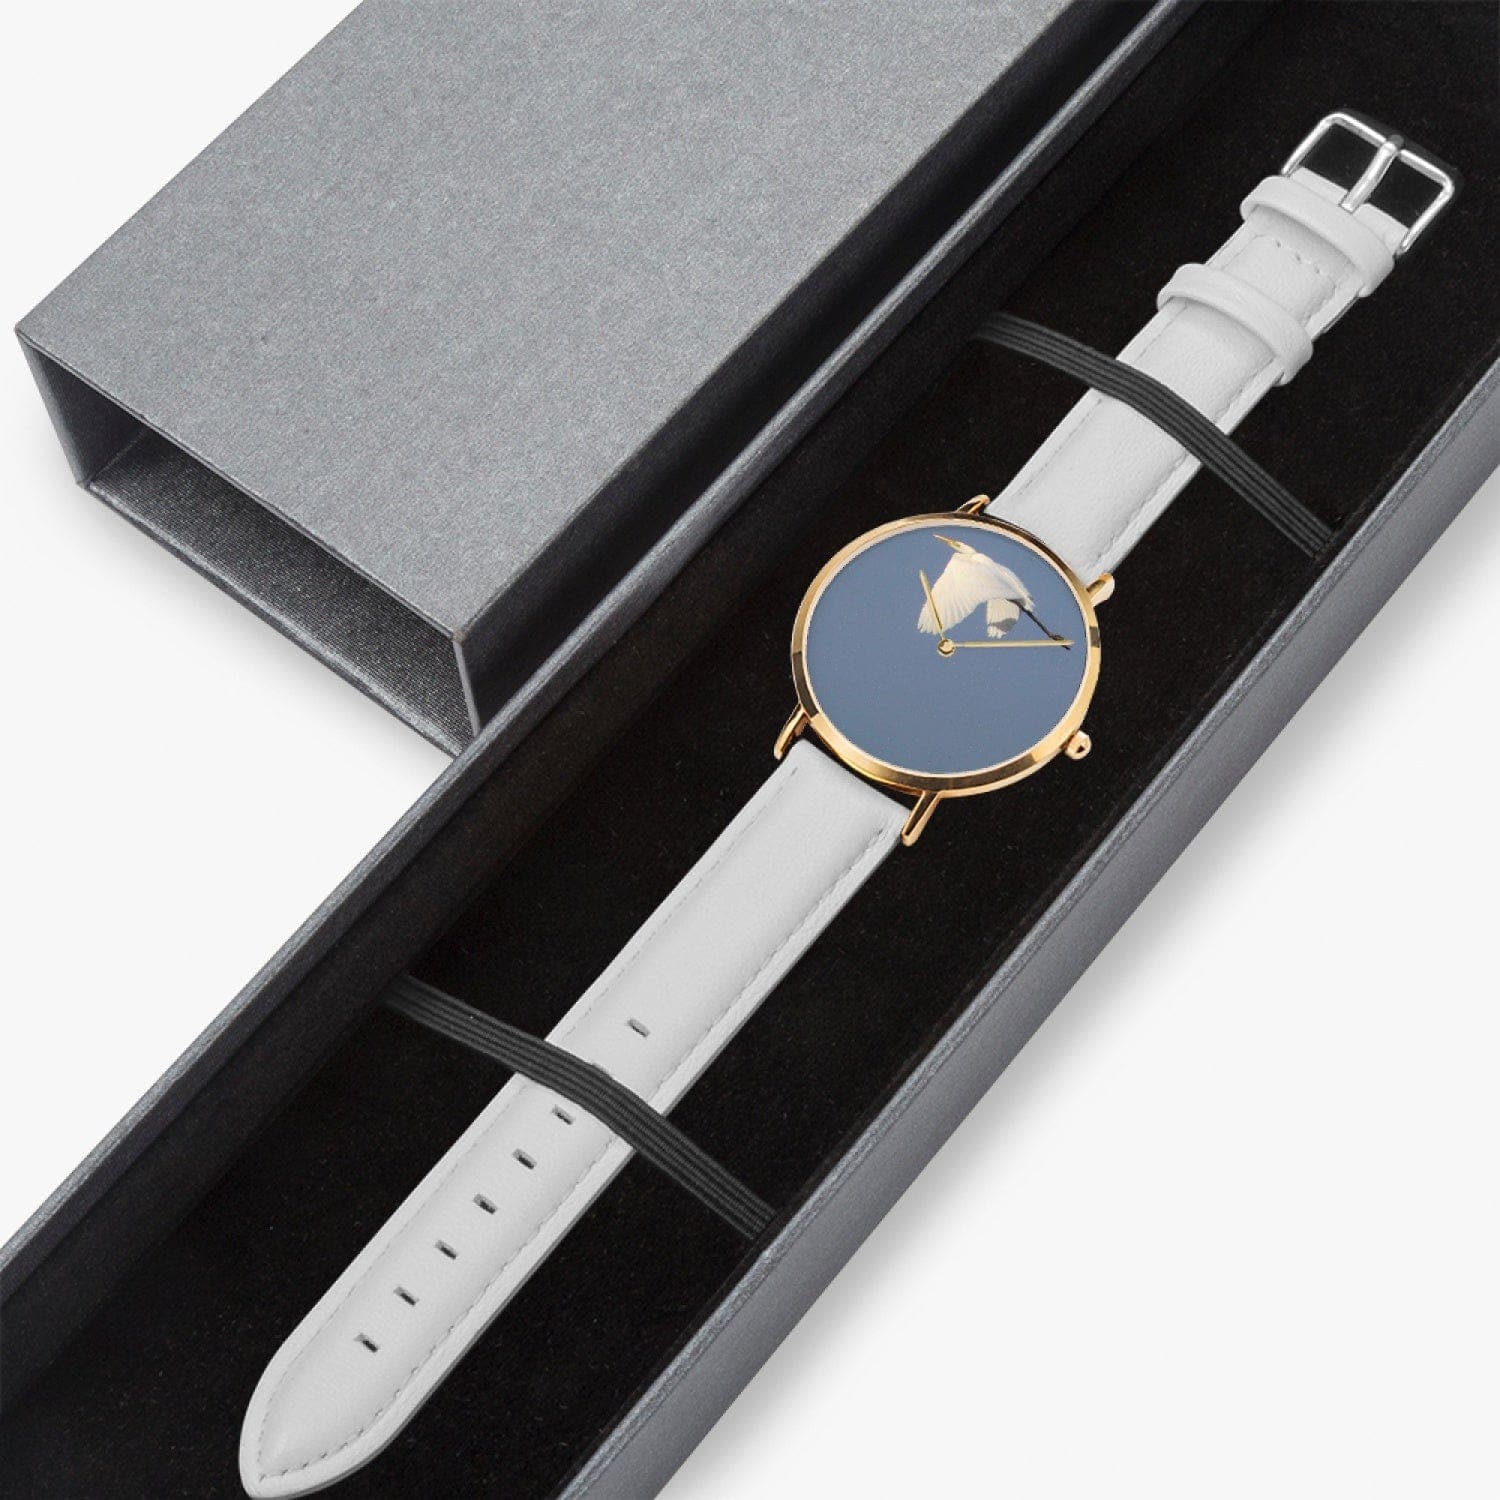 Silver Heron.   Ultra-Thin Leather Strap Quartz Watch (Rose Gold), by Sensus Studio Design